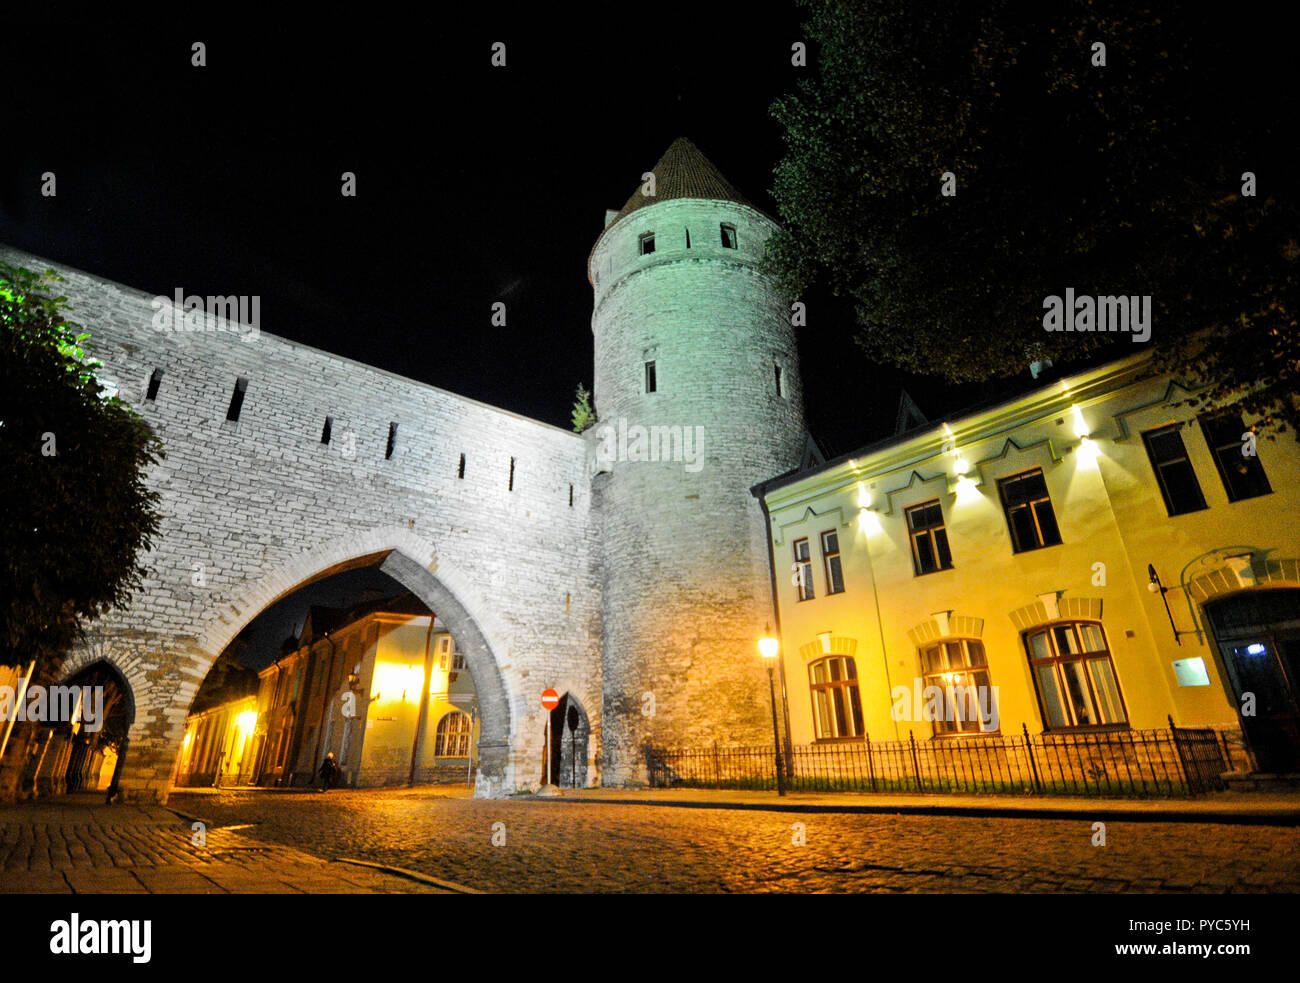 Tallinn's city wall, Estonia Stock Photo